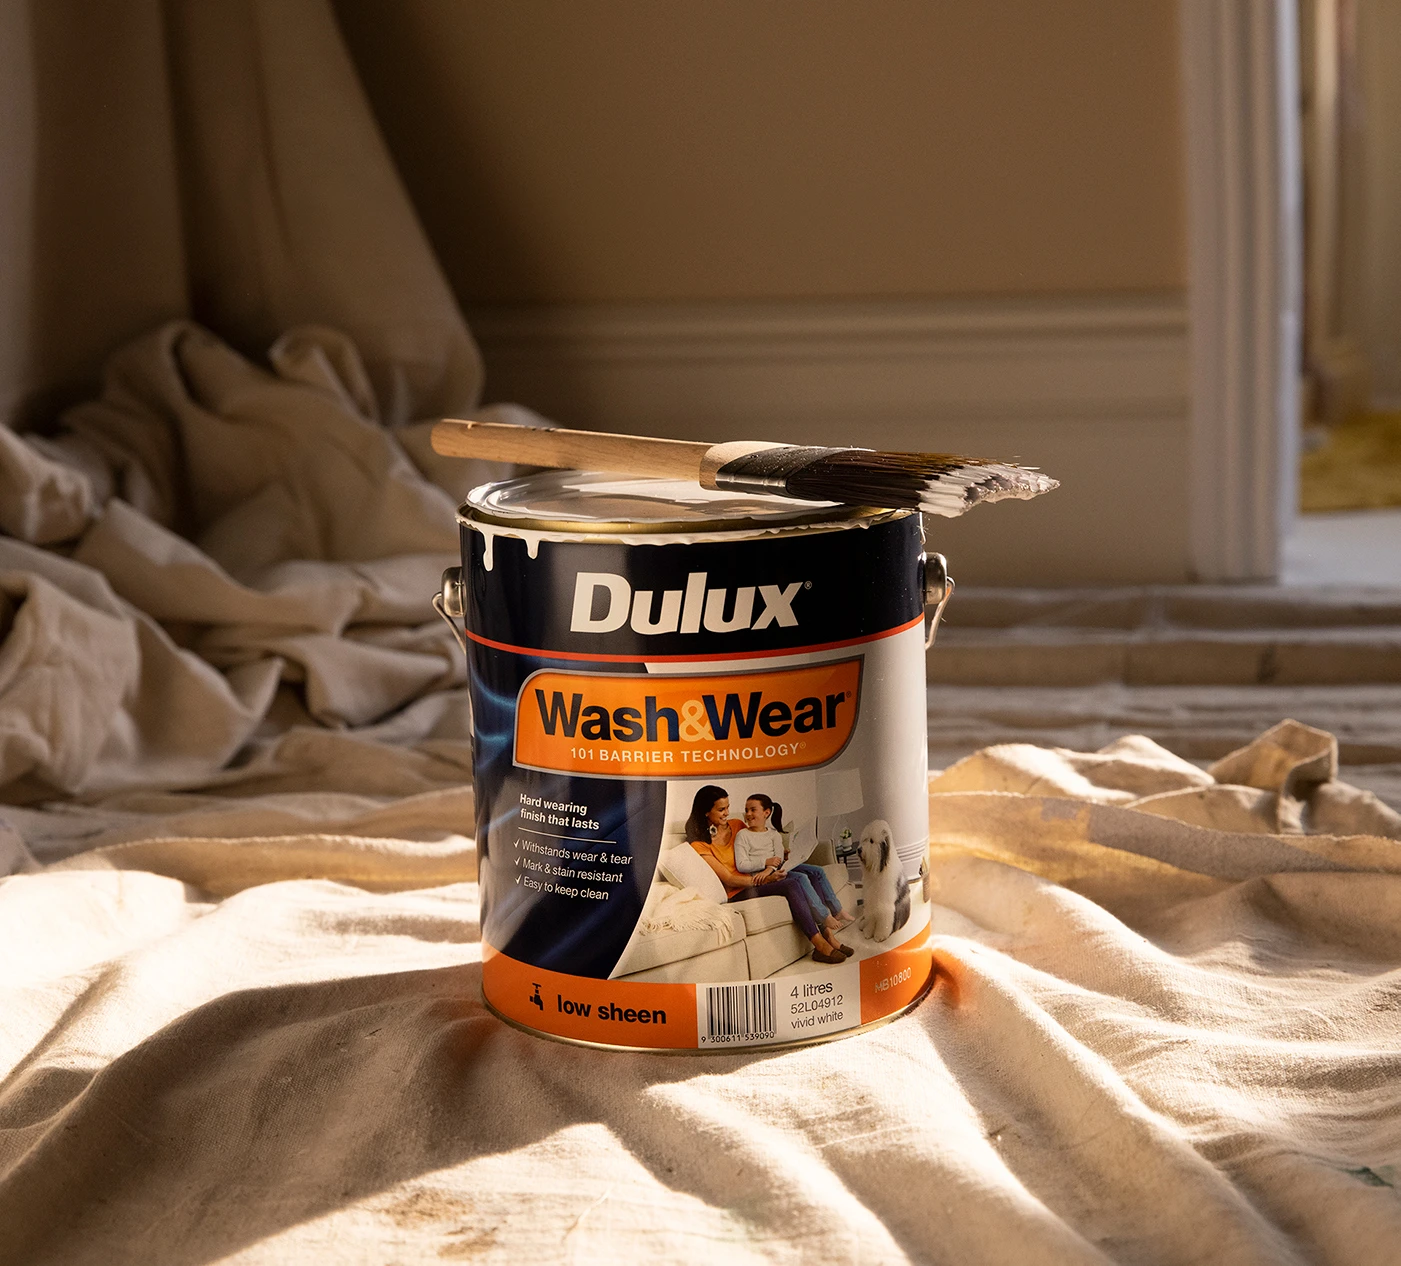 Can of Dulux Wash&Wear on drop sheet